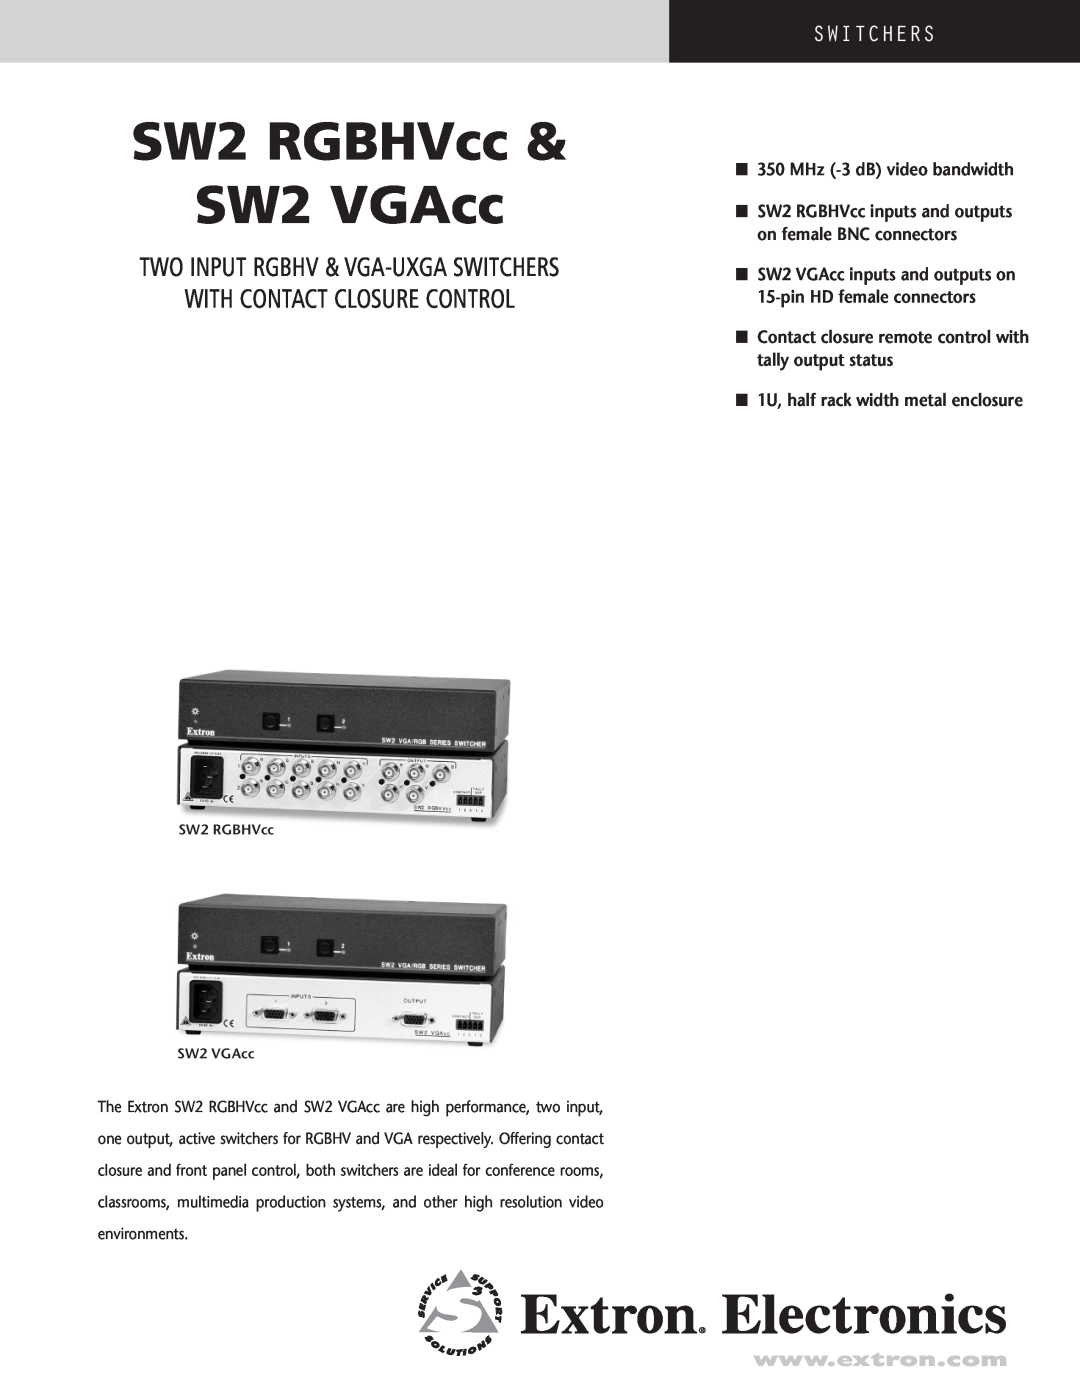 Extron electronic SW2 VGACC user manual VGA and RGBHV switchers, SW2 VGAcc and SW2 RGBHVcc, User’s Manual, Kudan Minami 